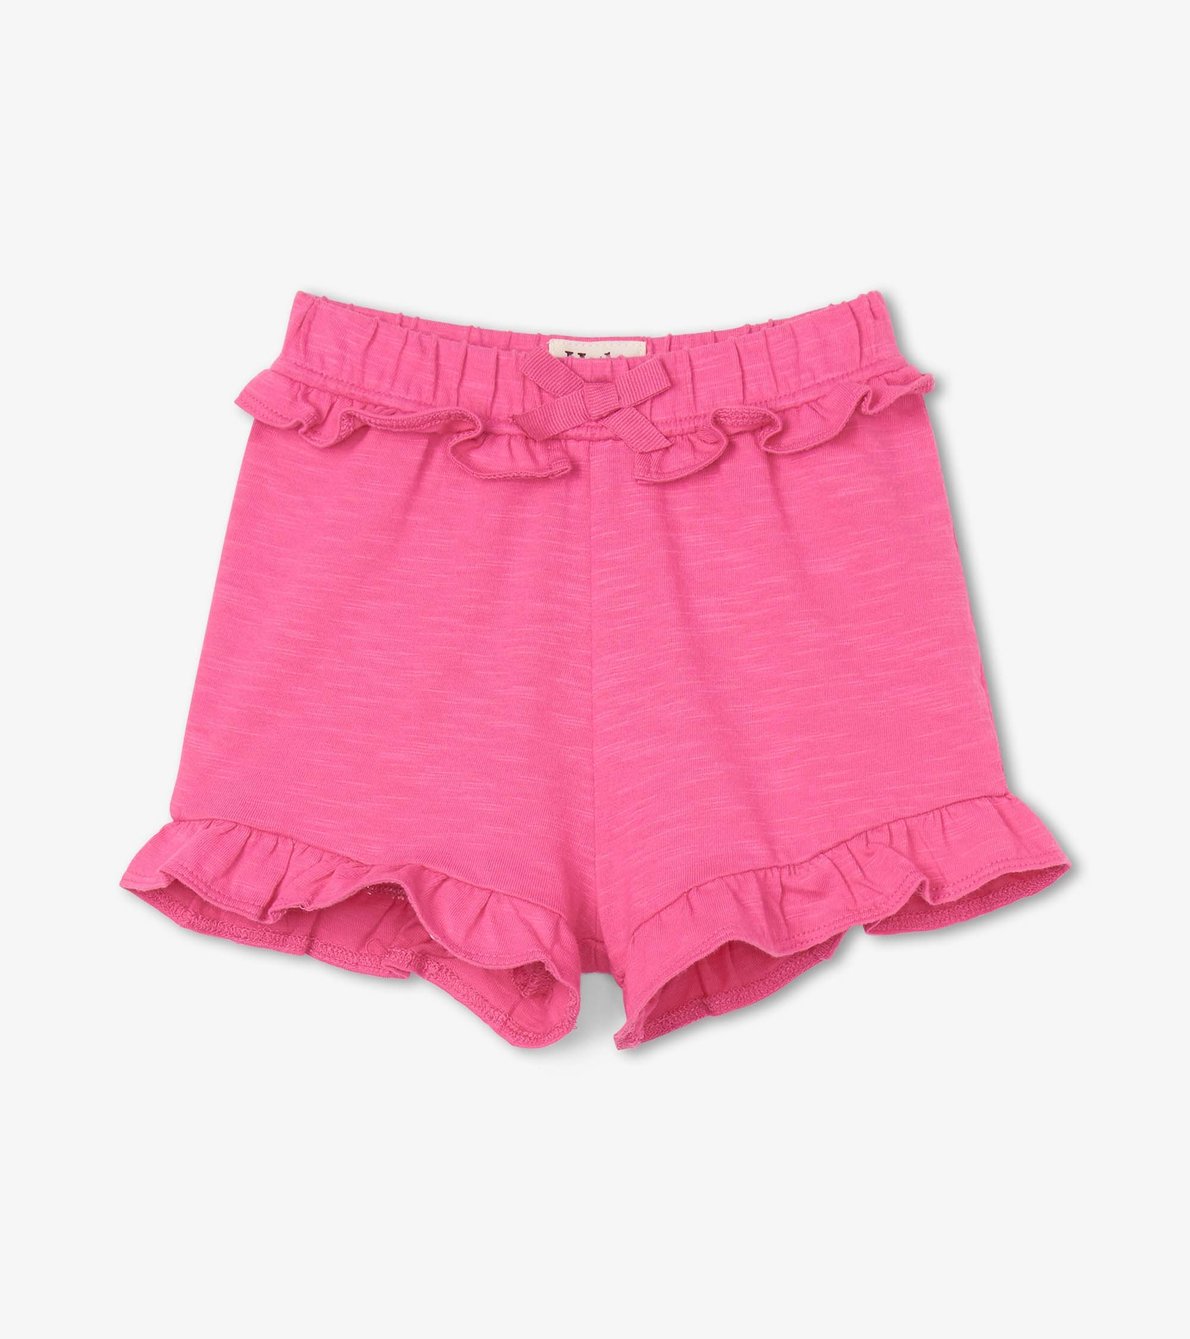 View larger image of Baby & Toddler Girls Carmine Rose Ruffle Shorts